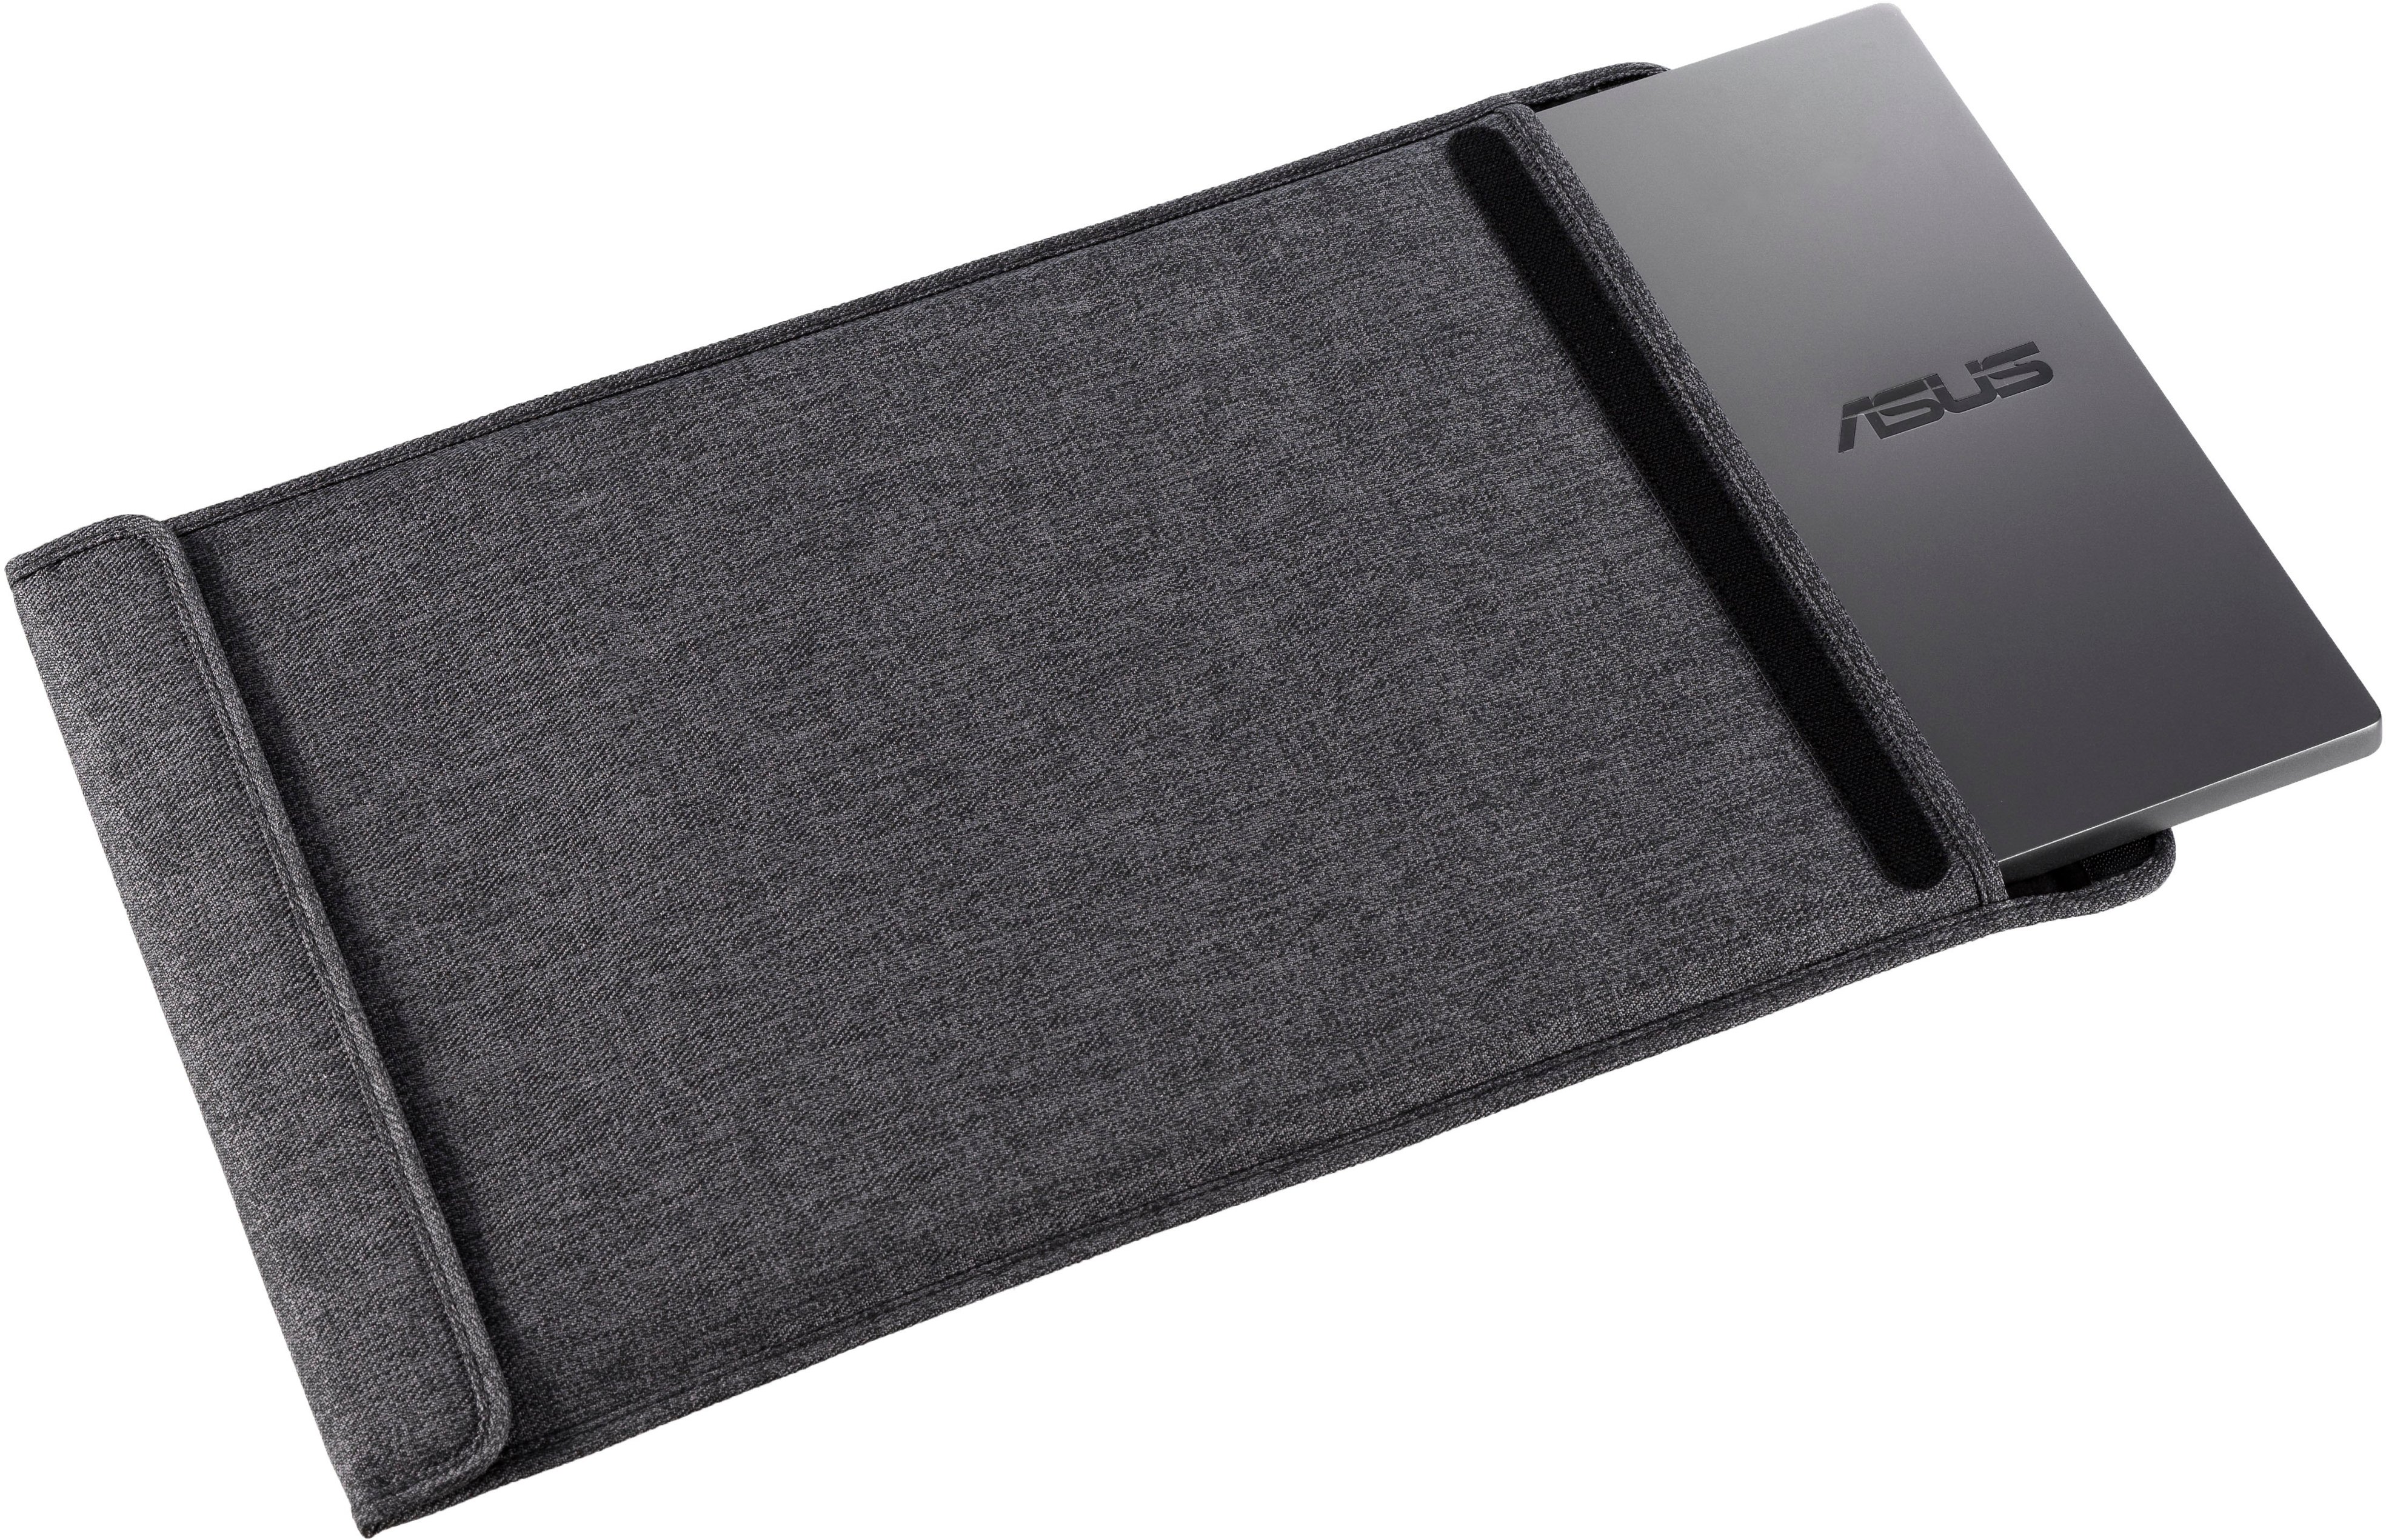 Best Buy: ASUS ZenScreen 15.6” IPS LED FHD USB Type-C Portable